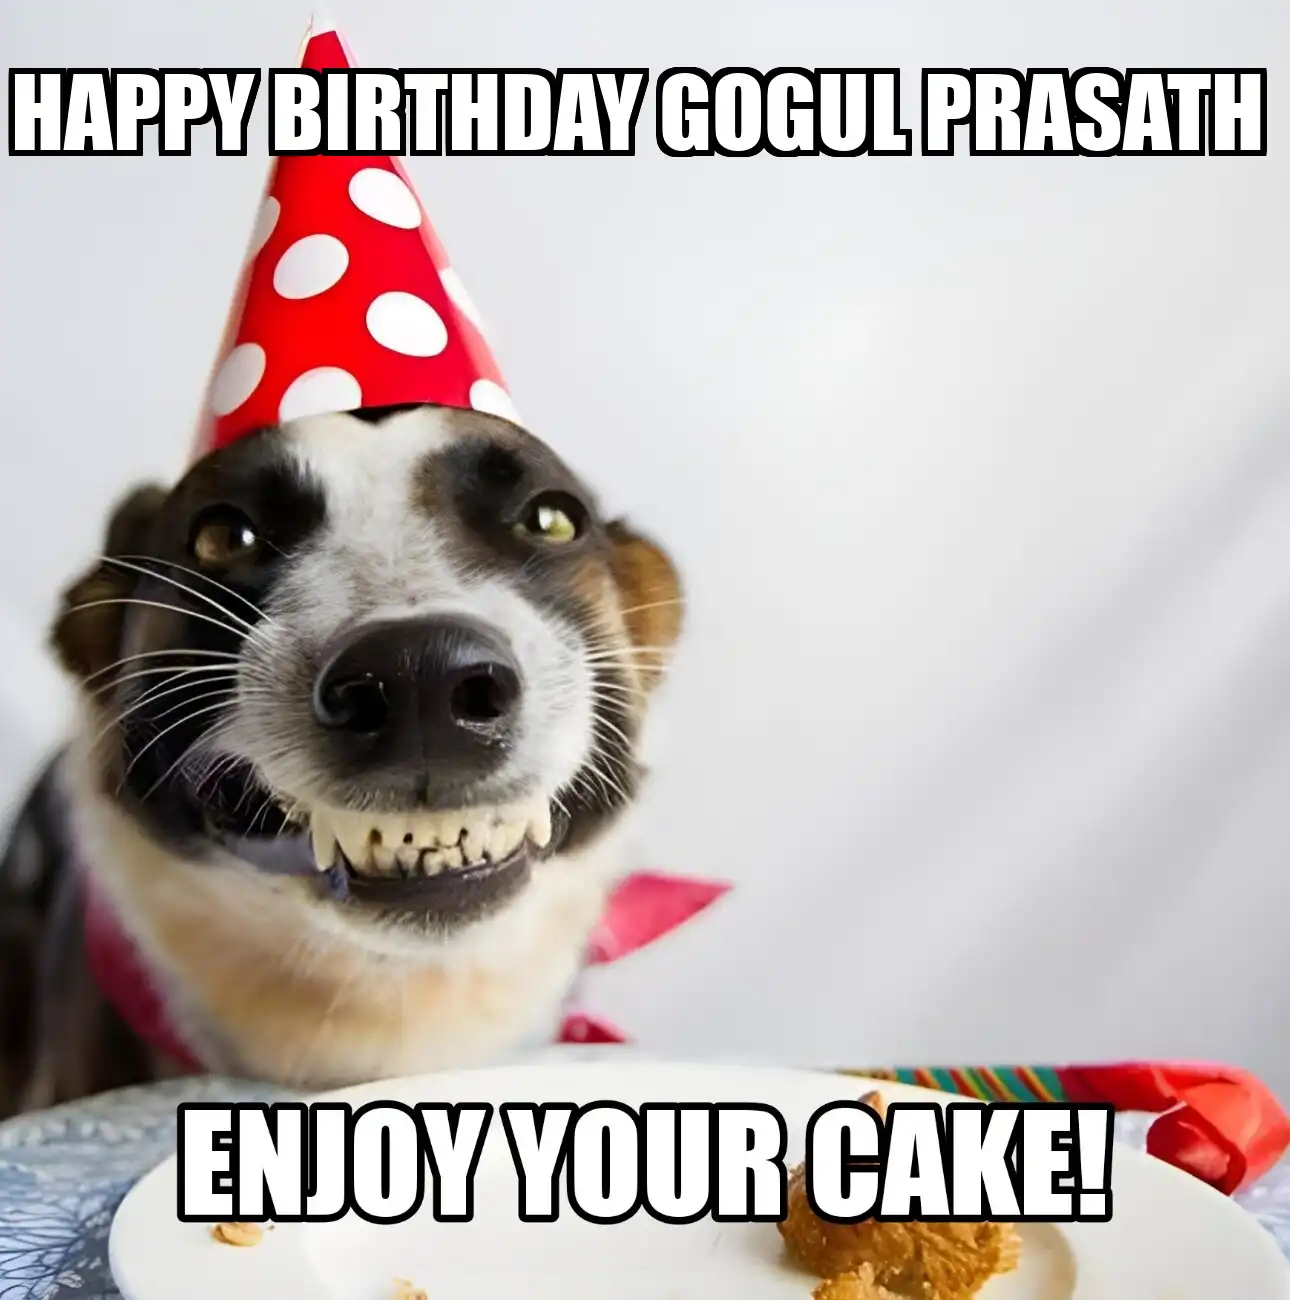 Happy Birthday Gogul prasath Enjoy Your Cake Dog Meme